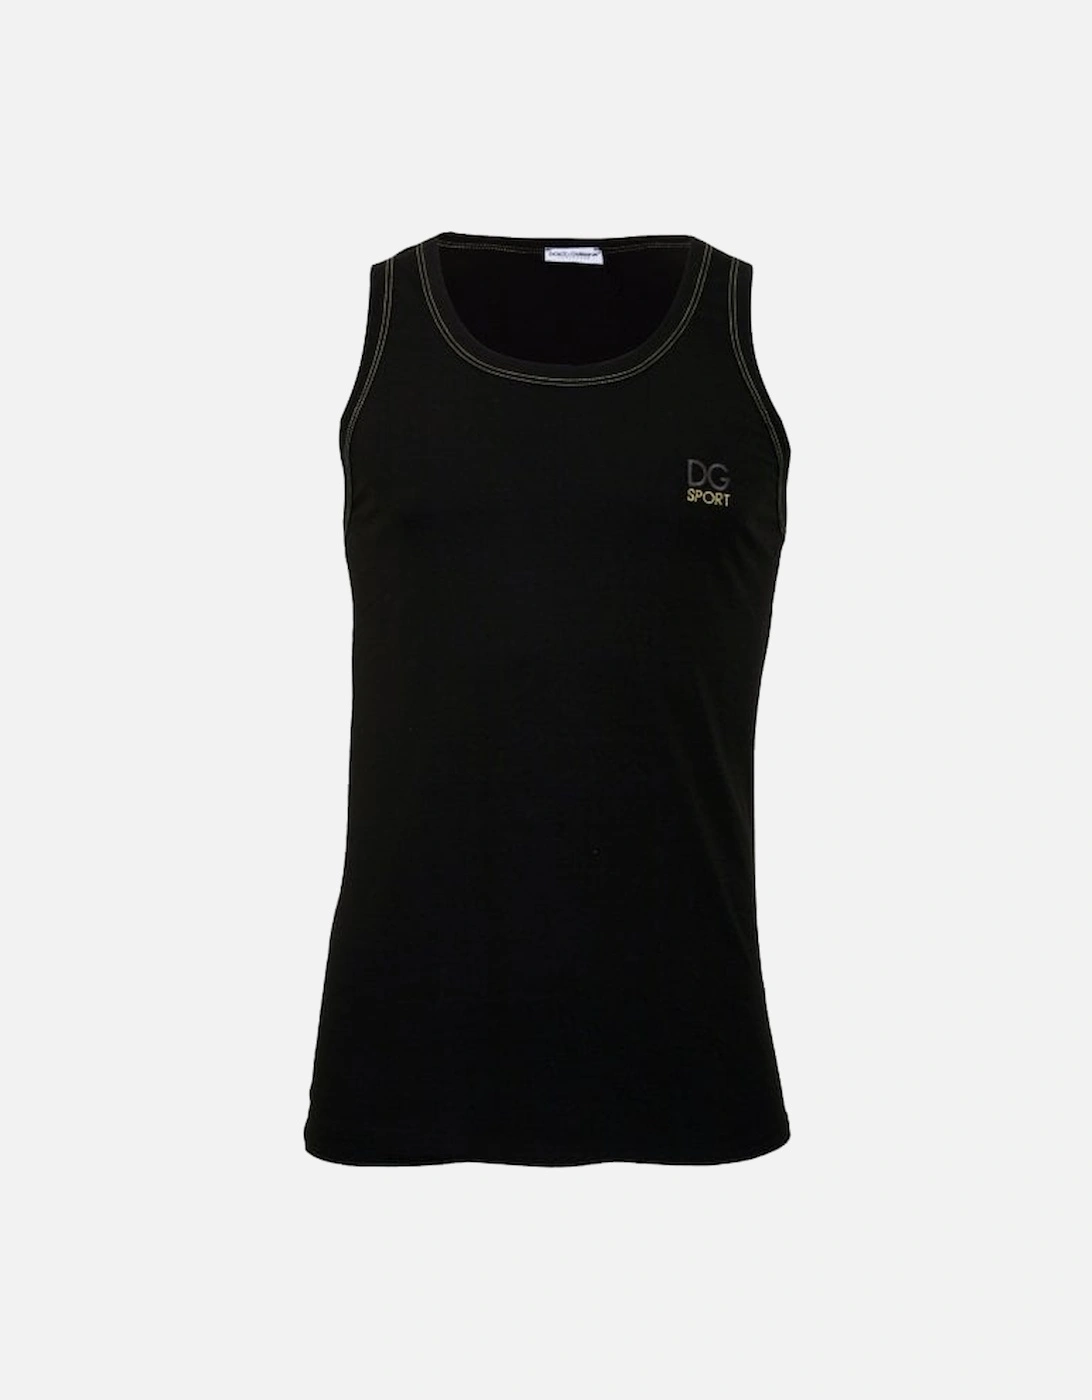 DG Sport Embroidery Pima Cotton Stretch Gym Vest, Black, 5 of 4